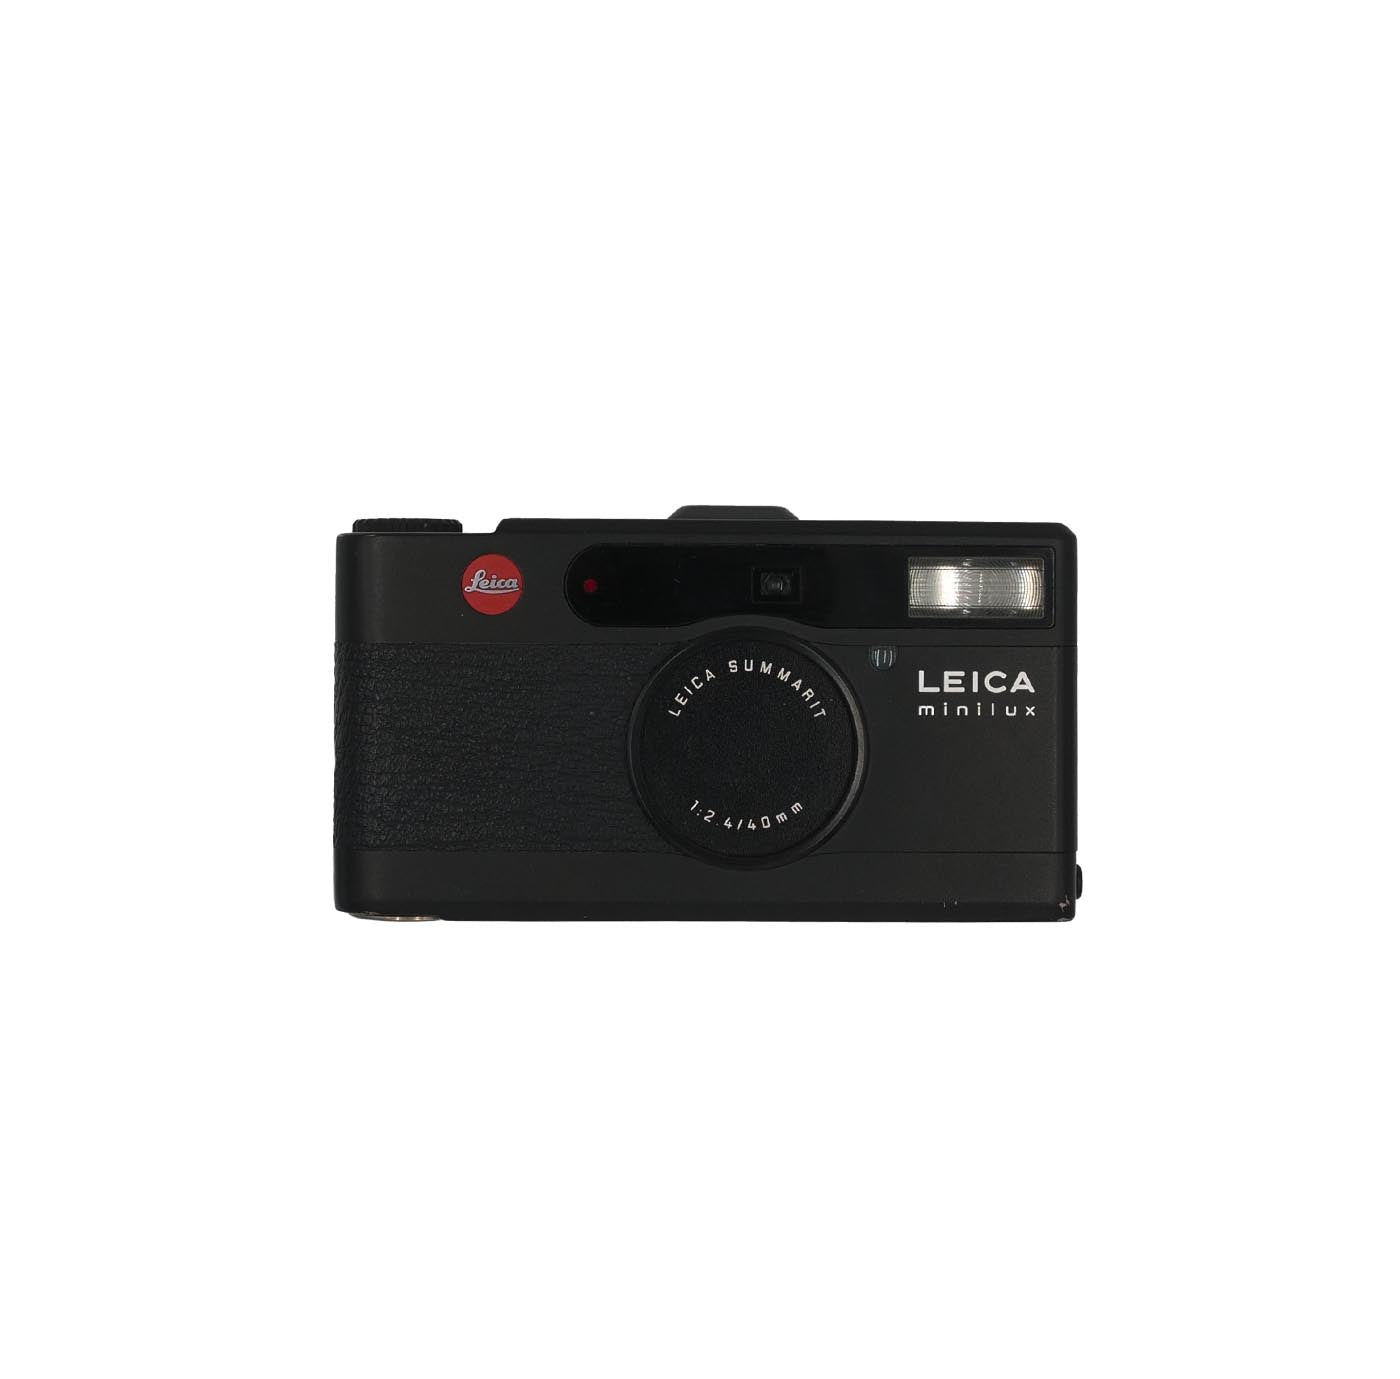 Leica minilux (black limited edition) - grainoverpixel